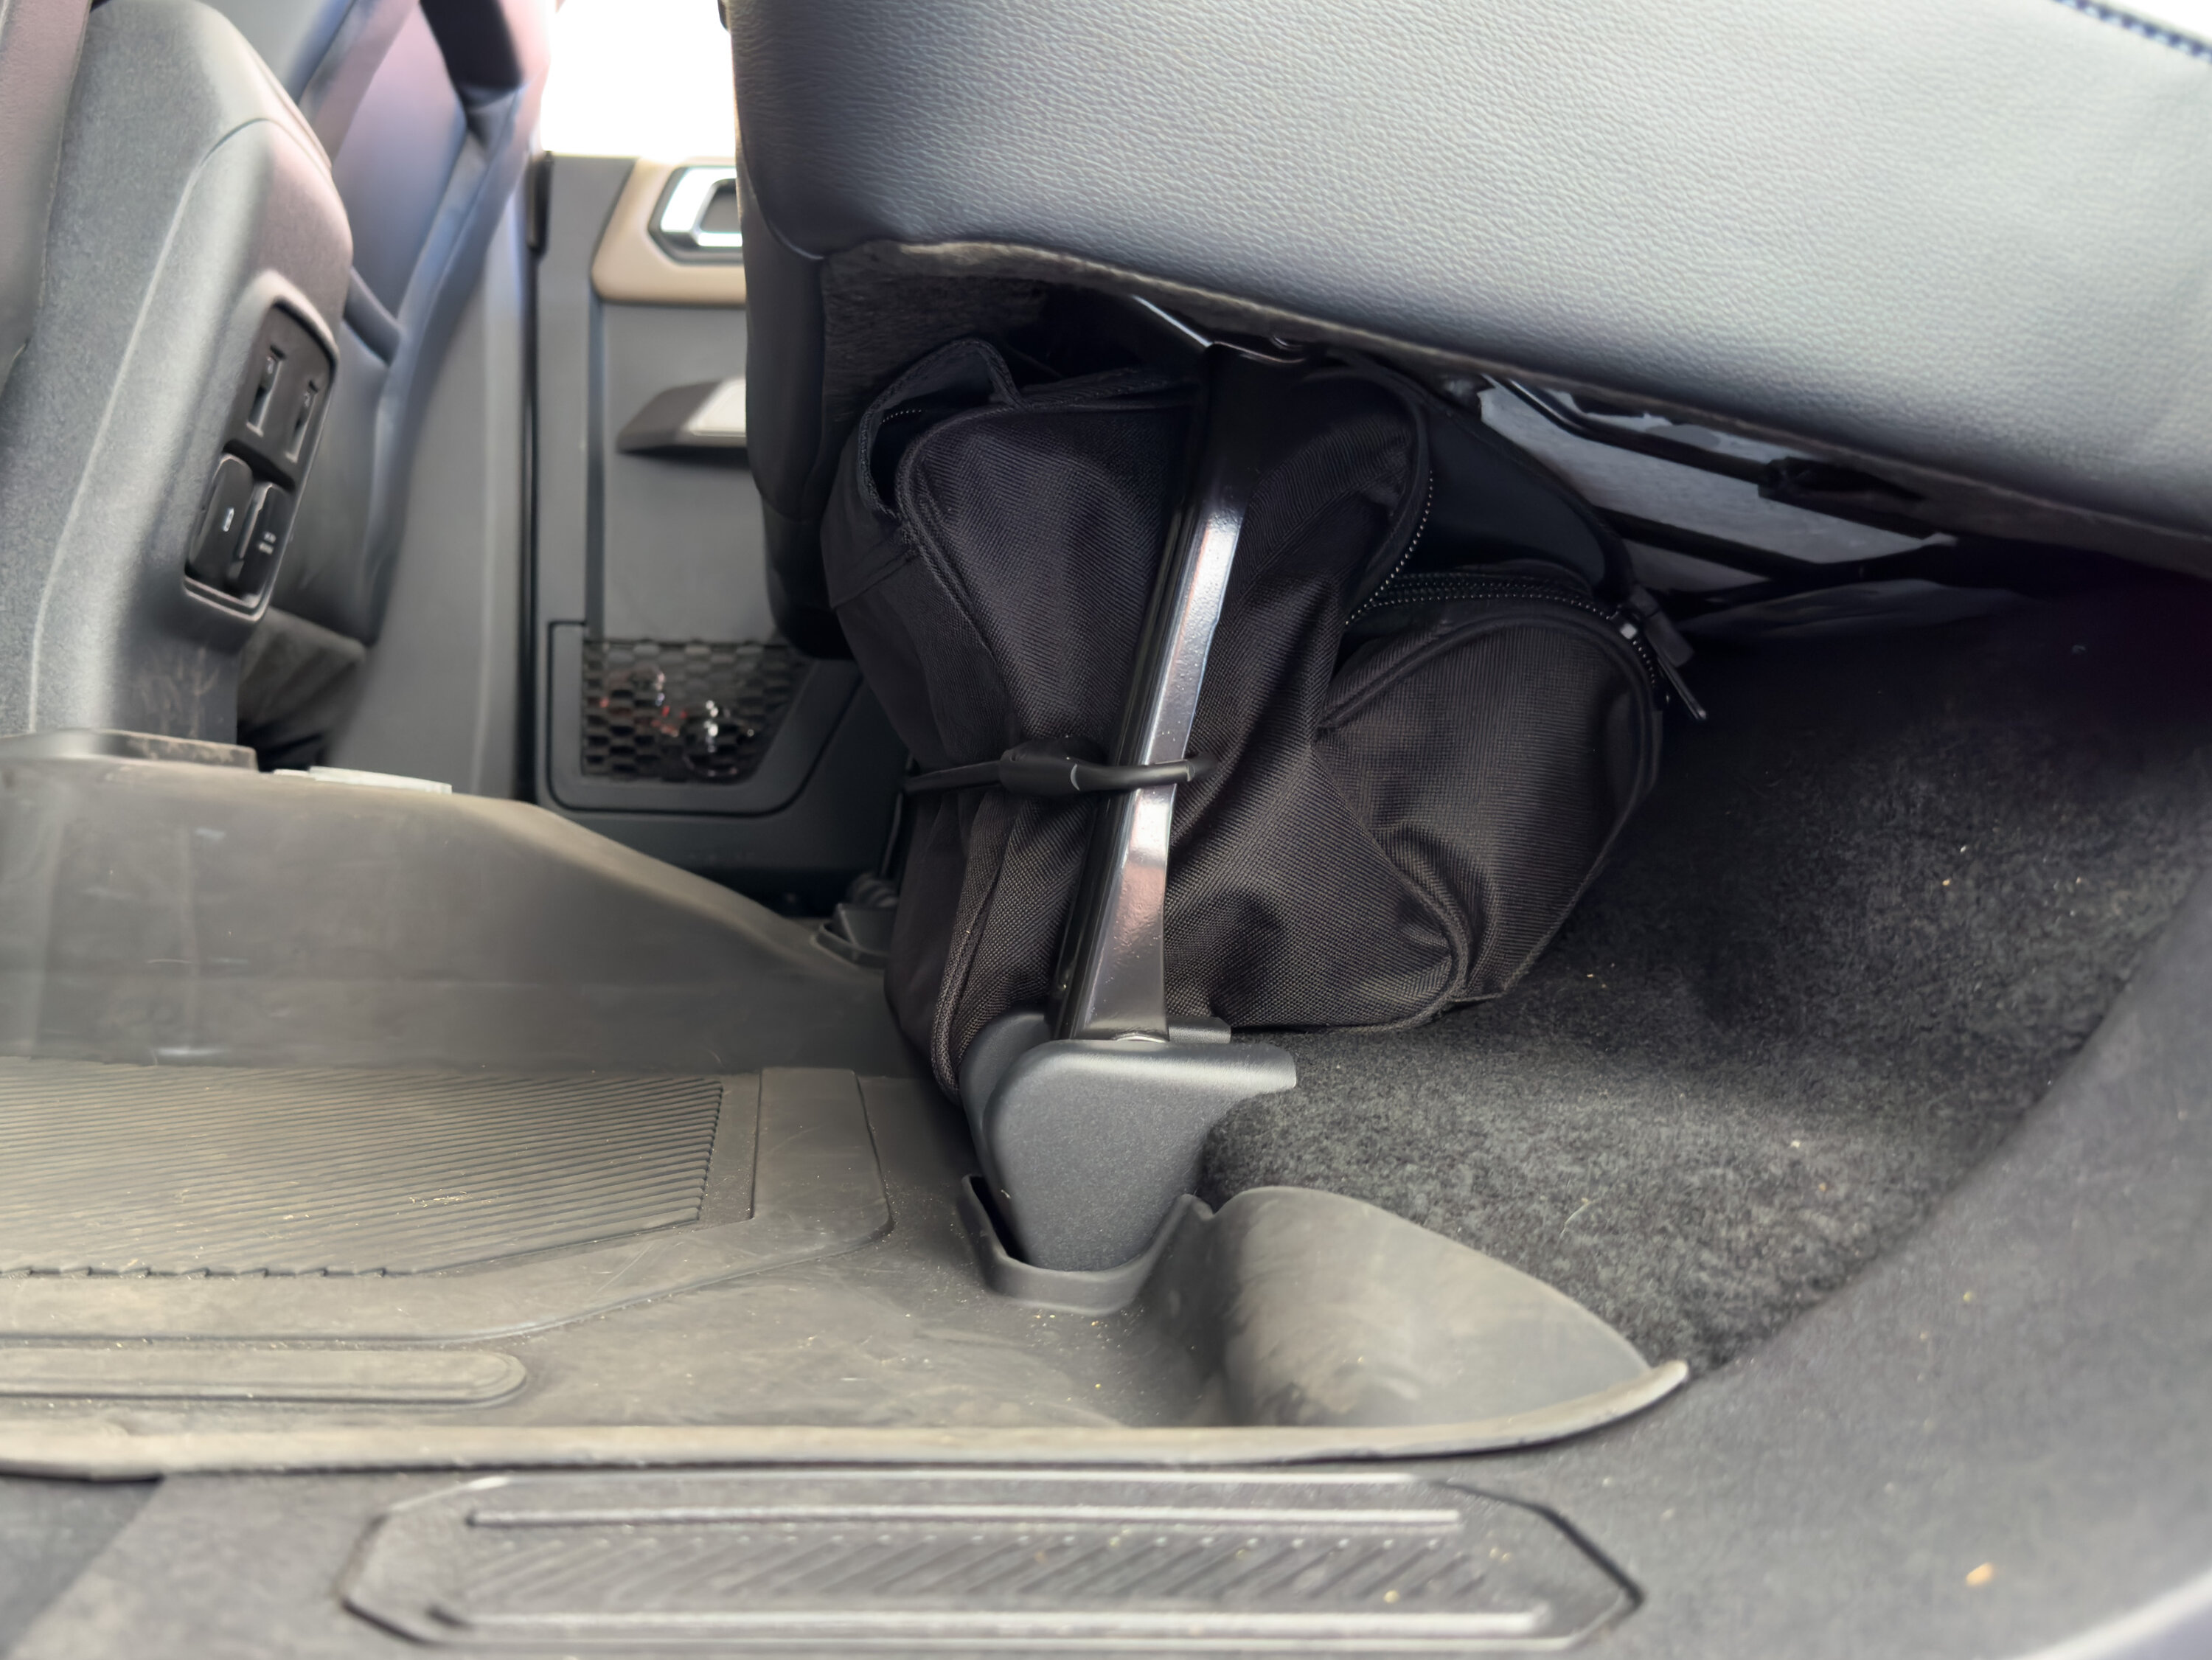 Ford Bronco VIAIR 300P Air Compressor Review Under Seat